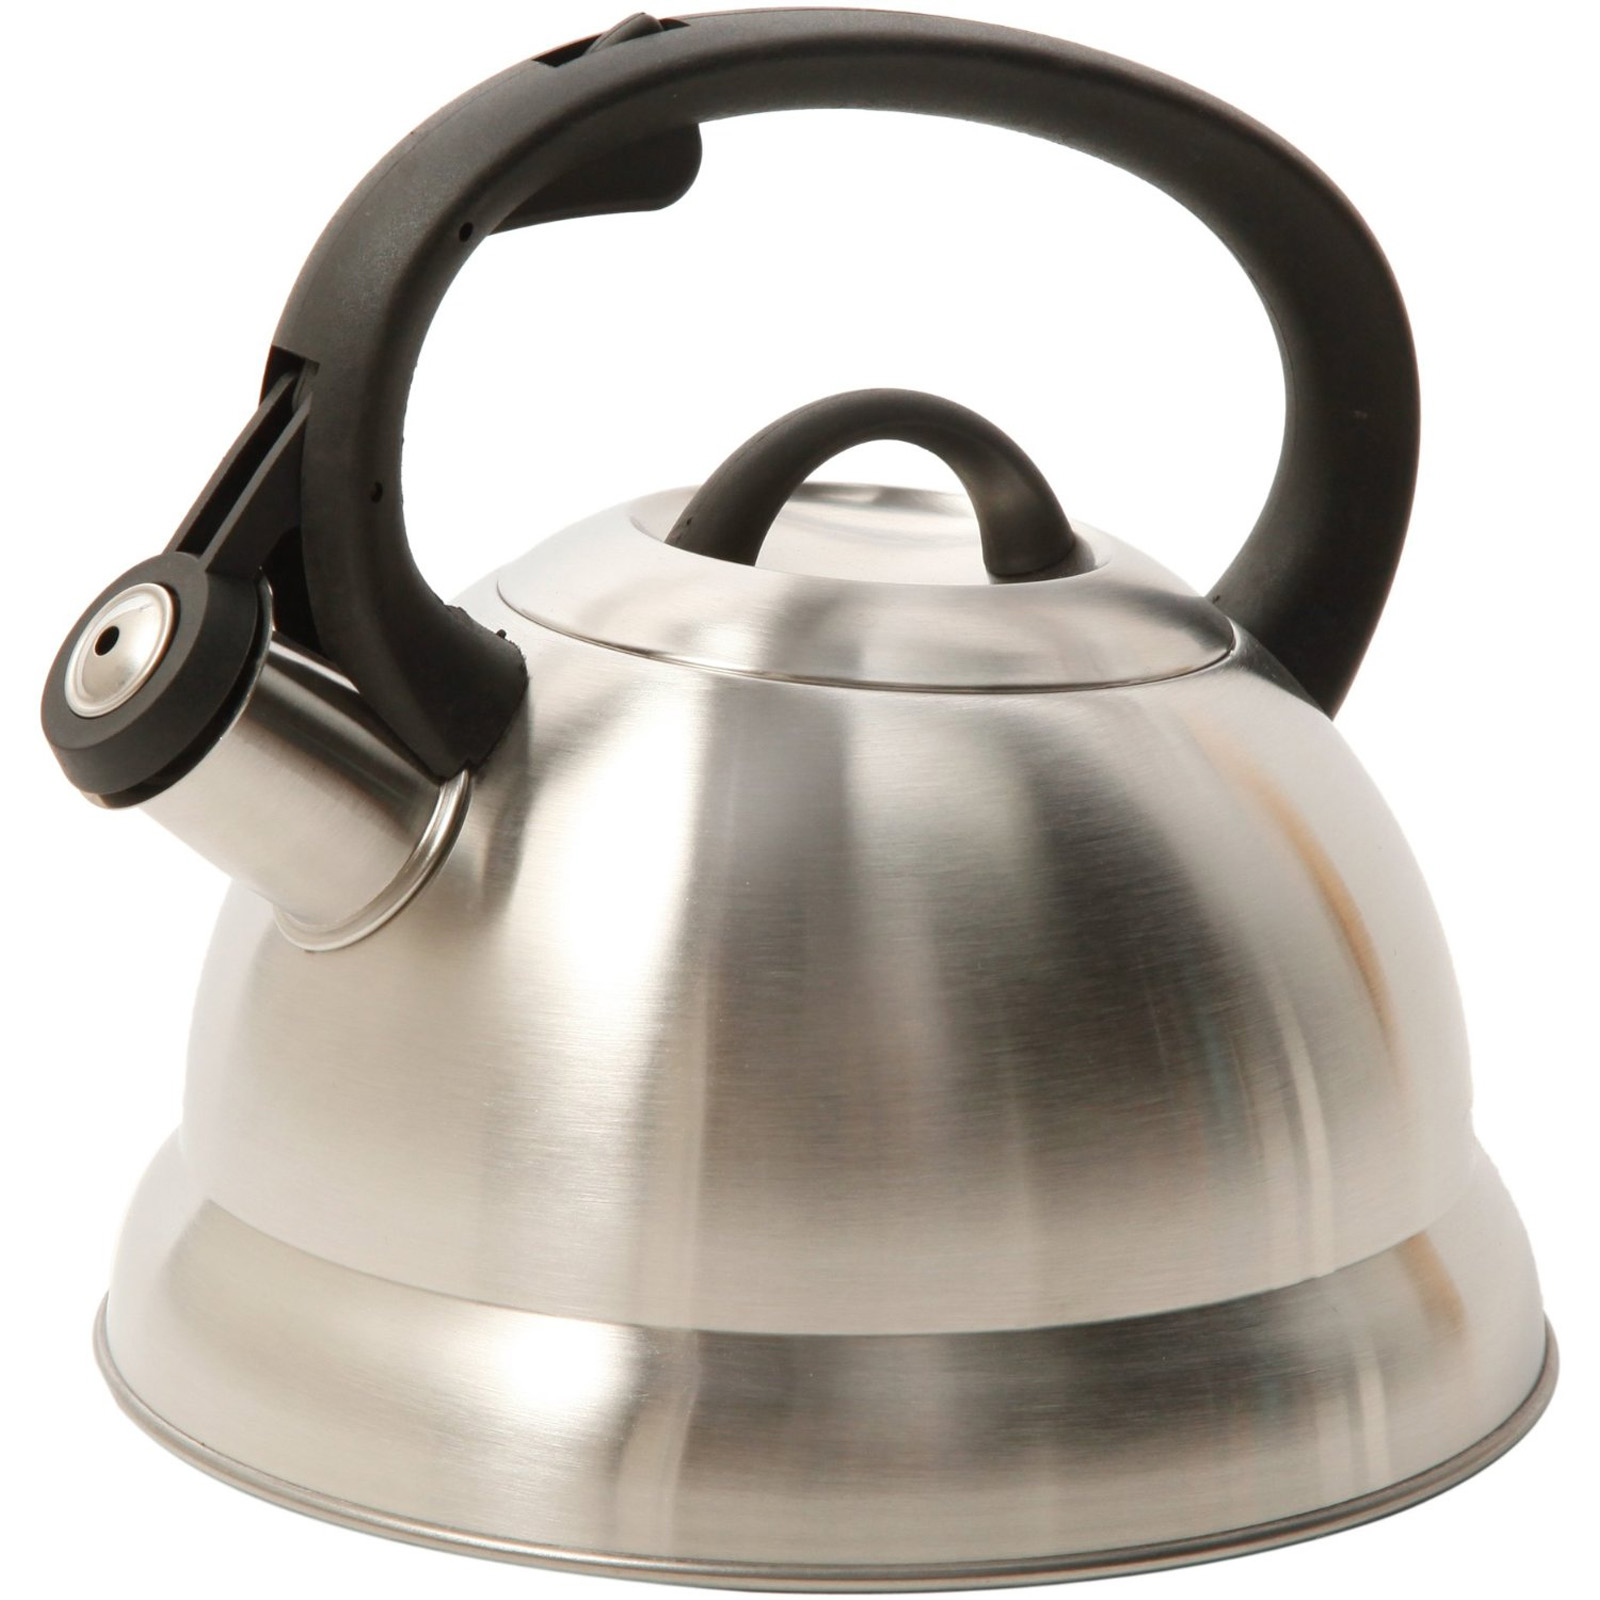 Mr. Coffee Flintshire 1.75-qt stainless steel whistling tea kettler for $6